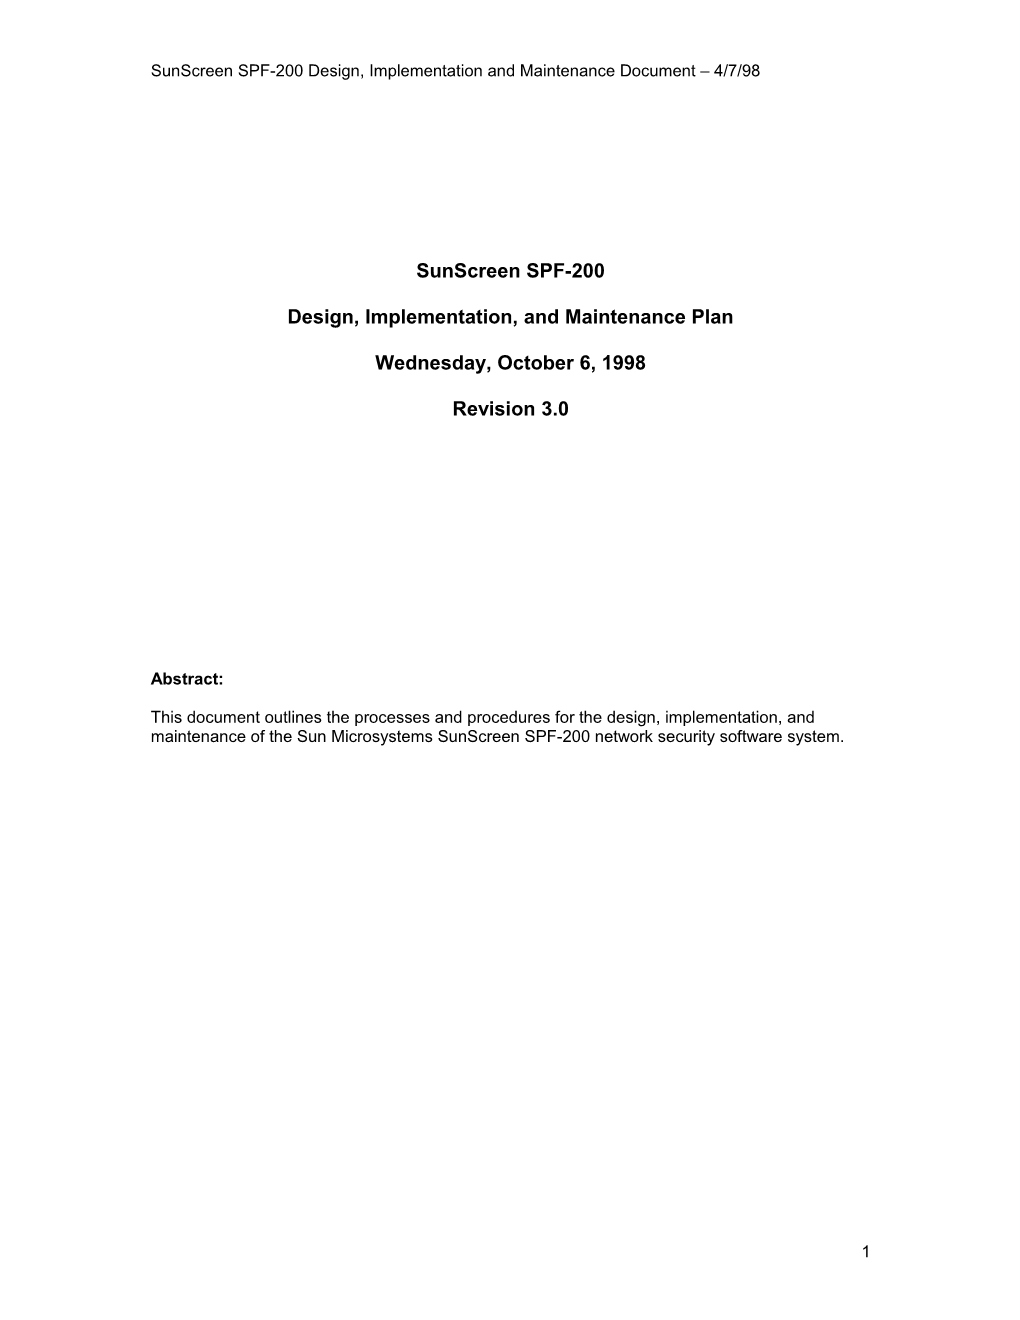 Sunscreen SPF-200 Design, Implementation and Maintenance Document 4/7/98